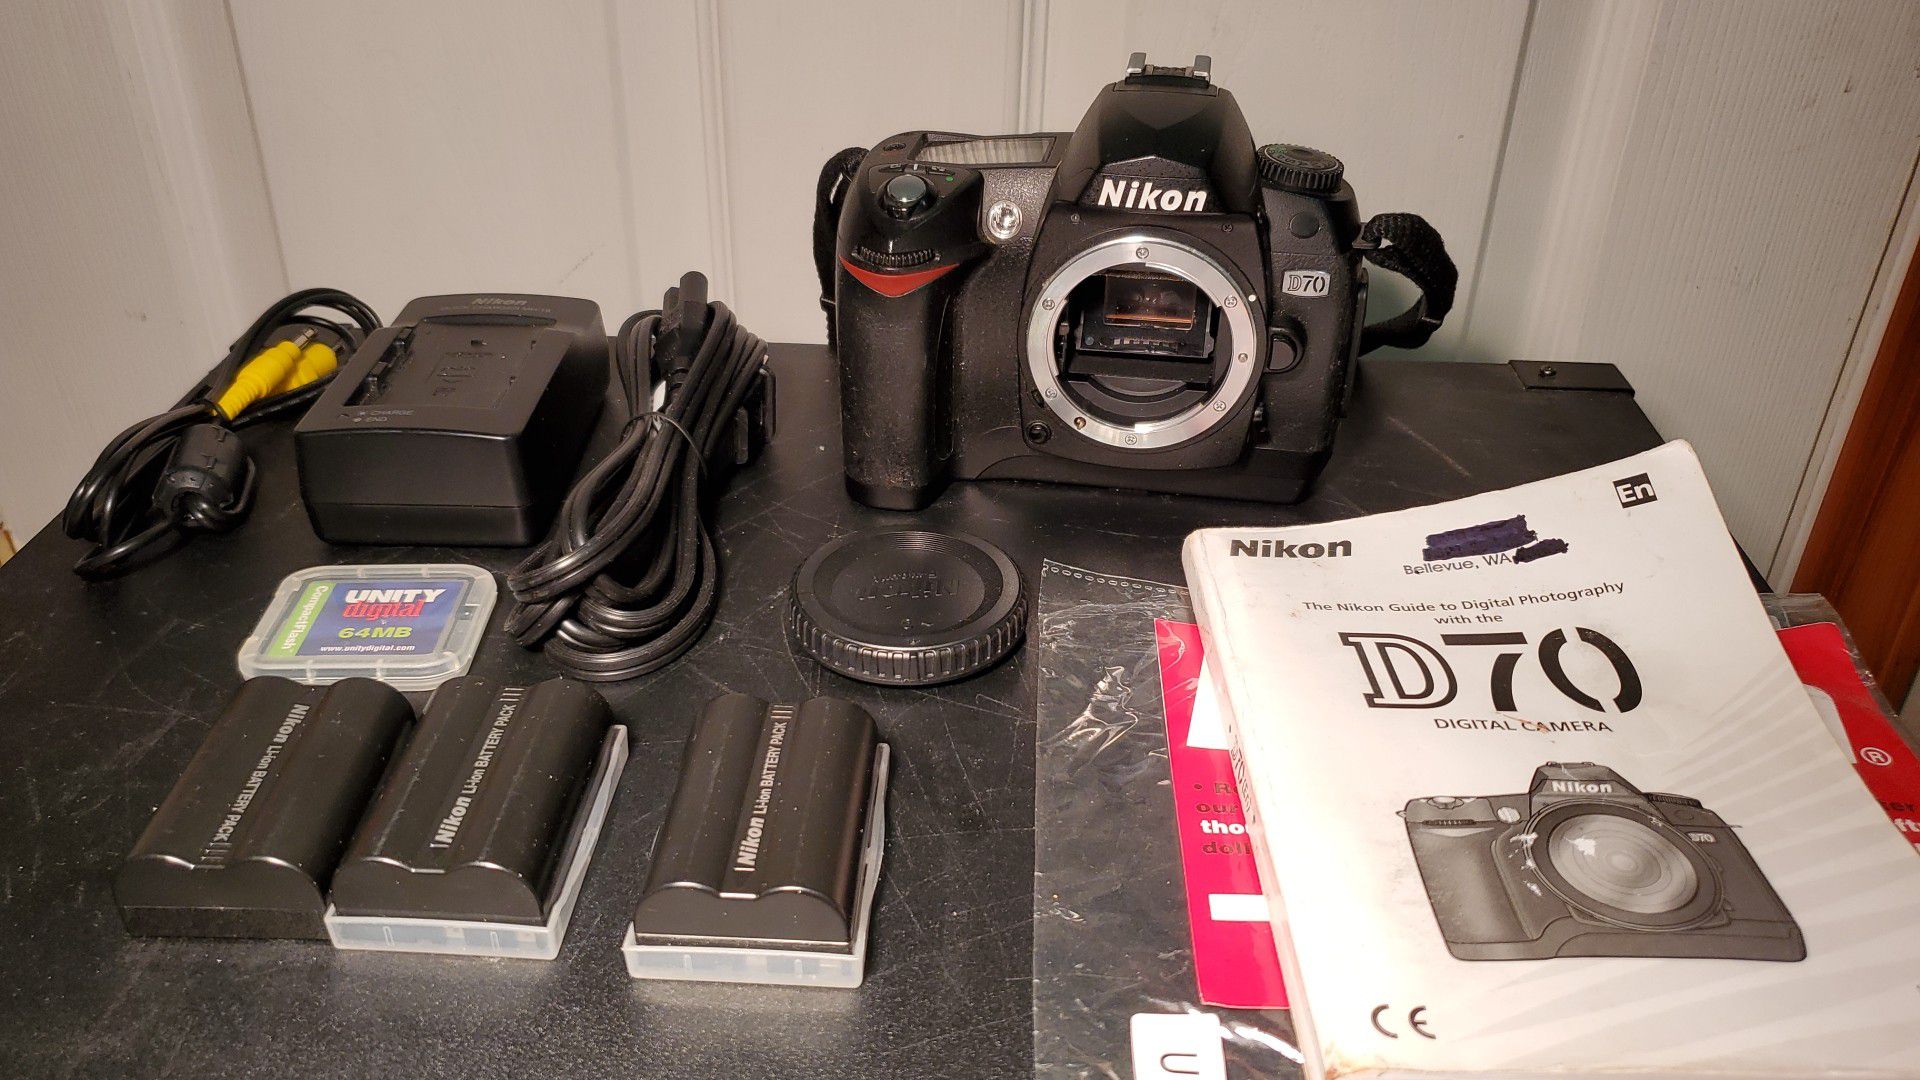 Nikon D D70 6.1MP Digital SLR Camera - Black (Body Only) + extras